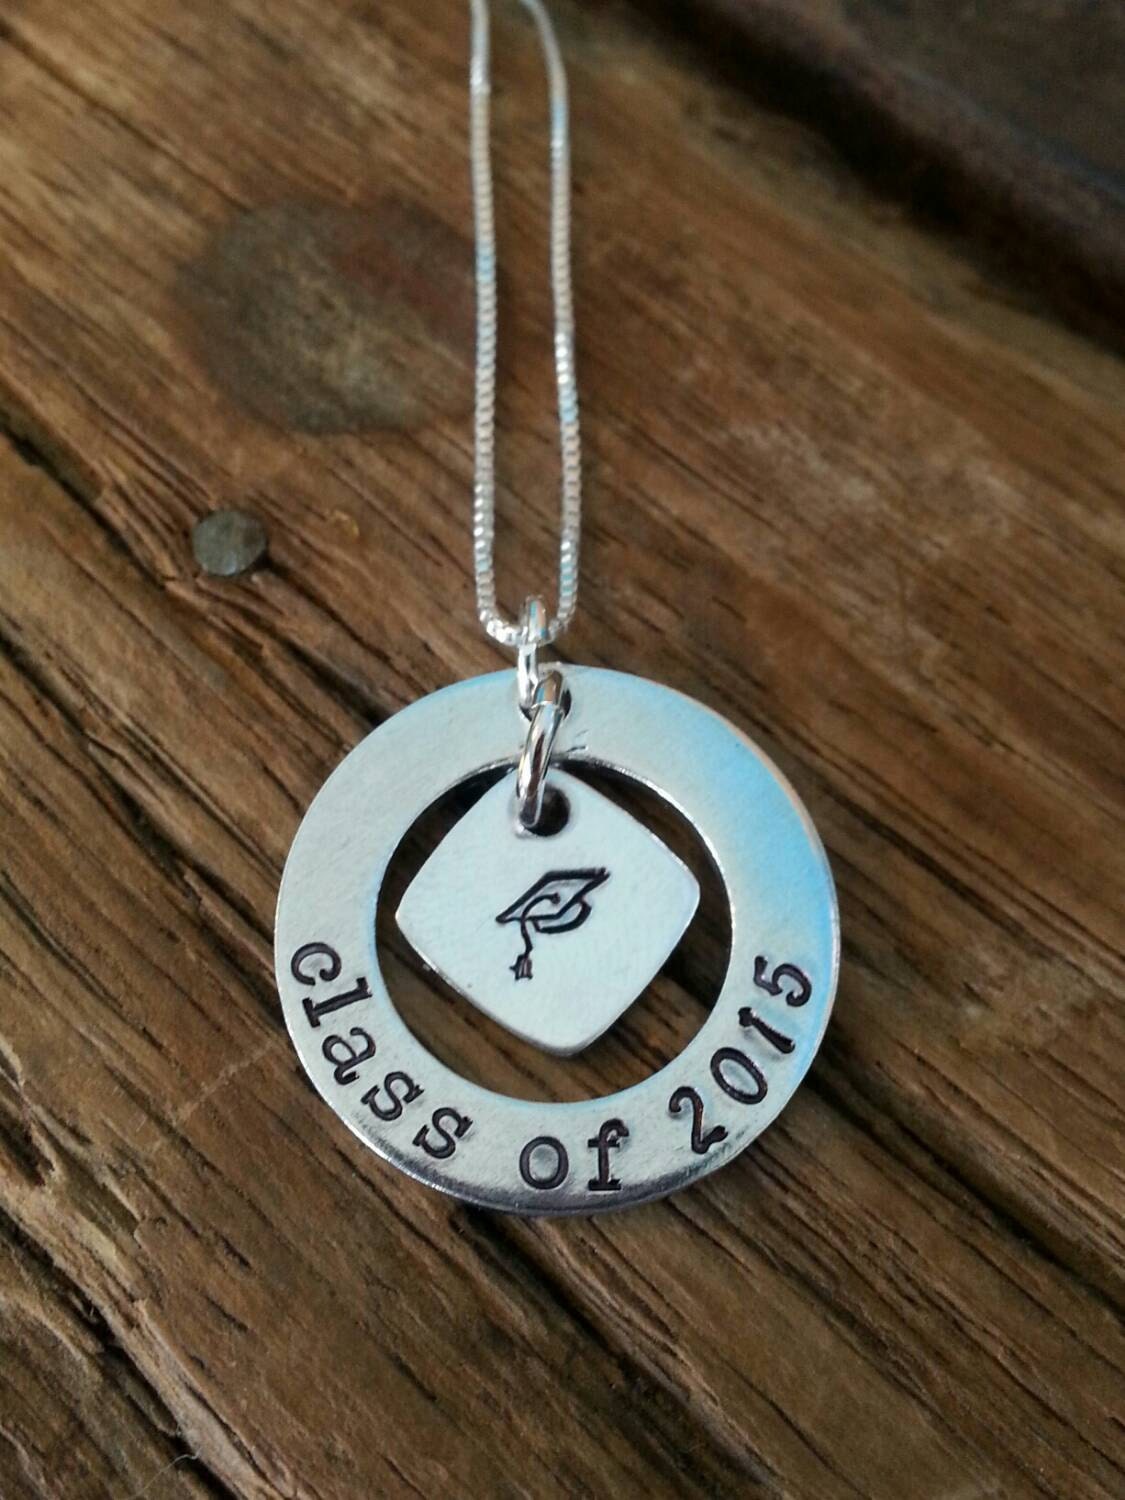 Graduation necklace class of 2016 gift high school
